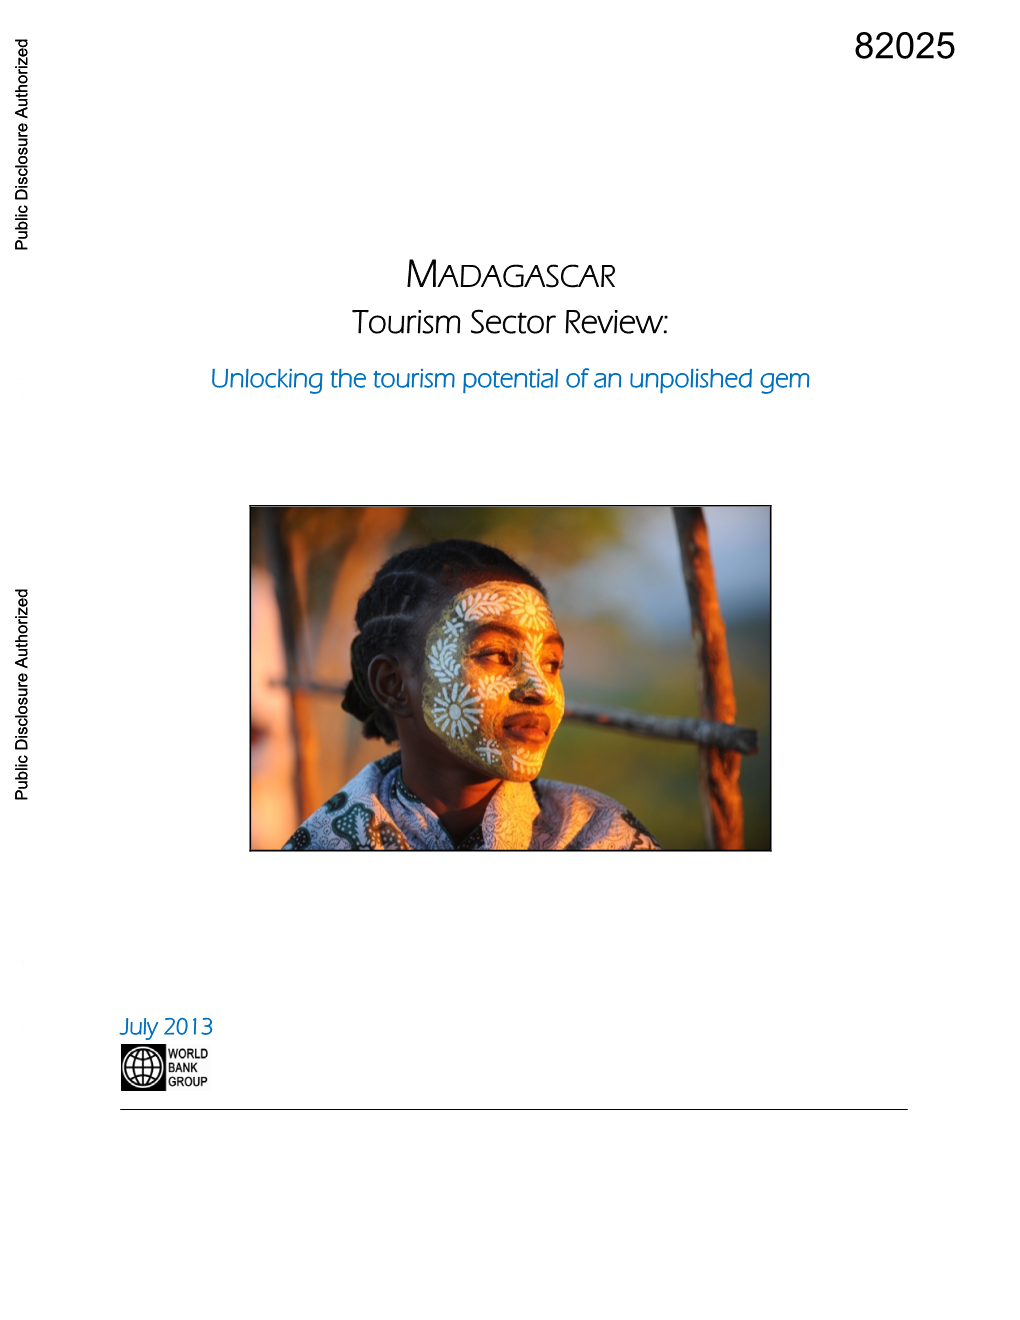 Snap Shot of Madagascar's Tourism Sector (2011)